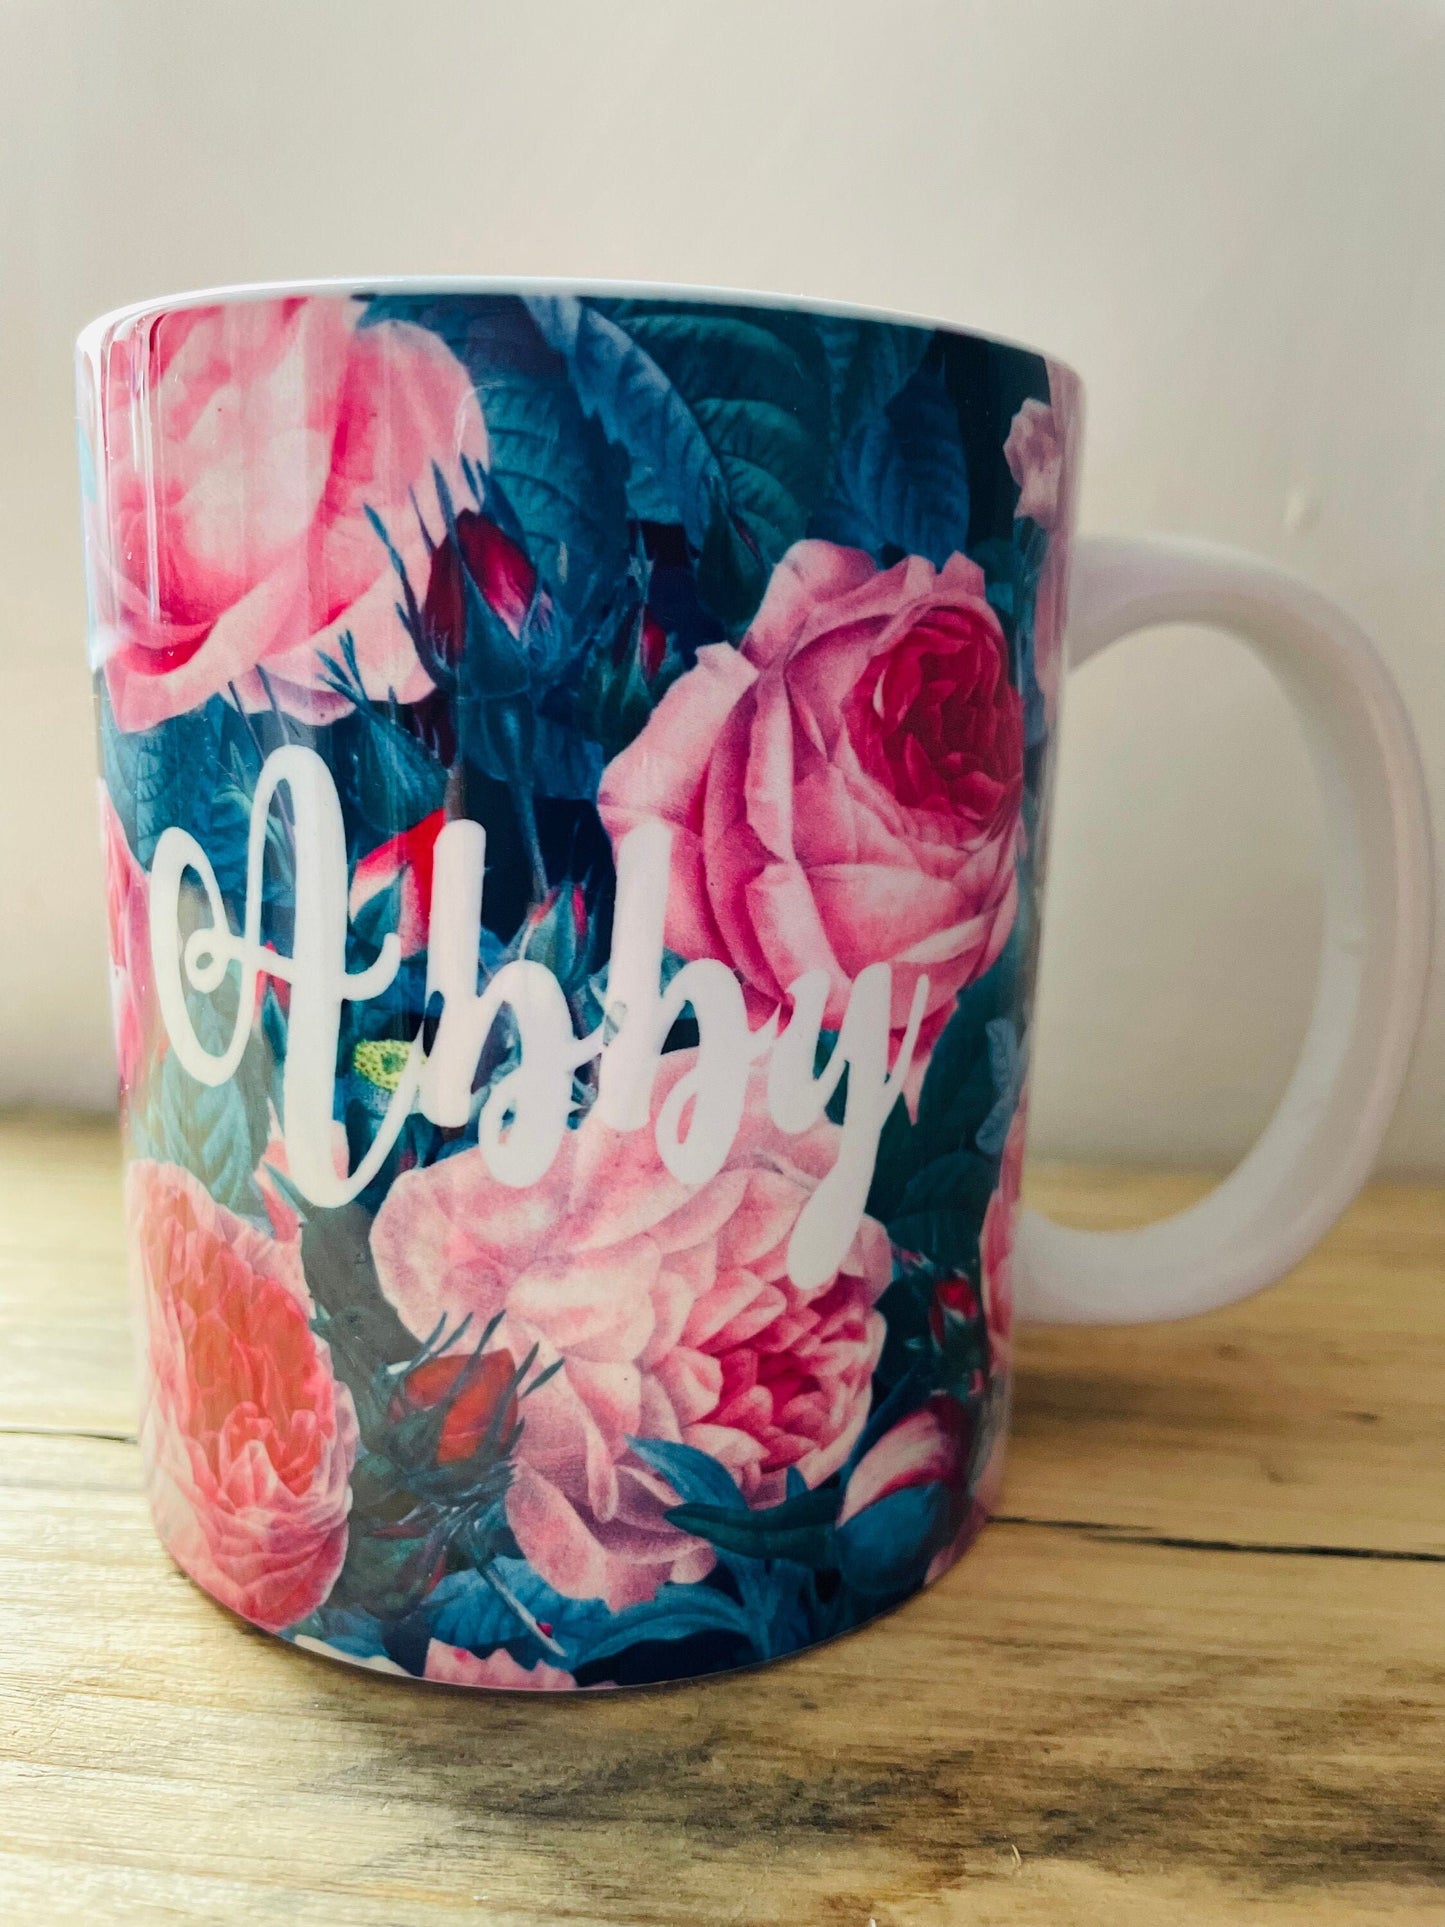 Personalised English Rose Tea or Coffee Mug, Botanical Decor Gift for Coffee Lover, Custom Printed Rose Cup with Name, Dishwasher Safe Mug